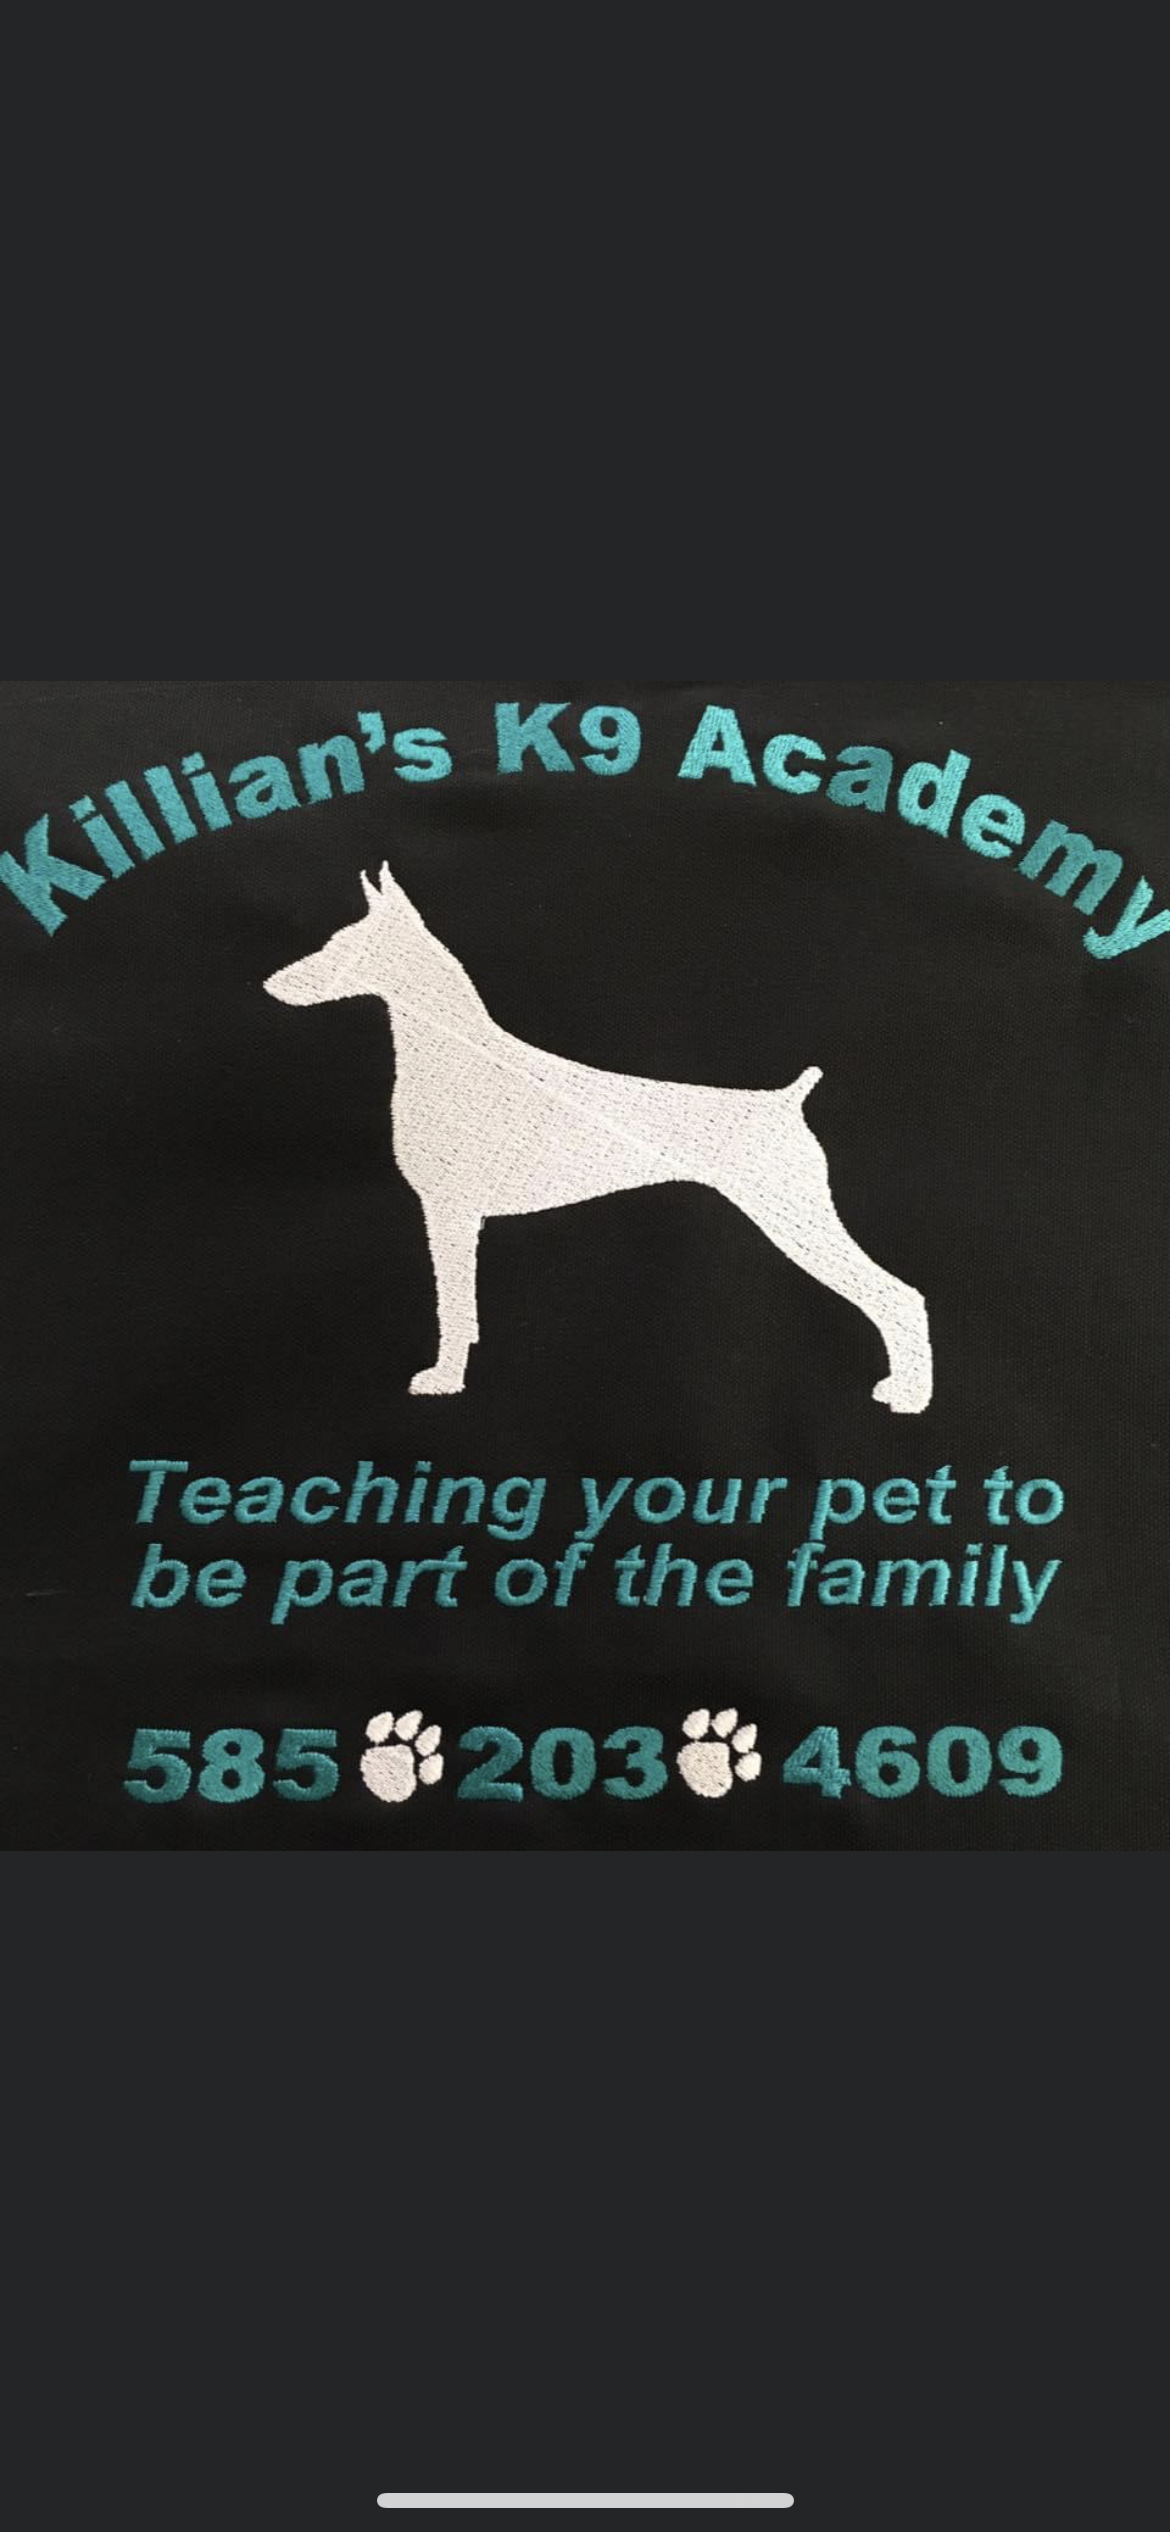 Killian’s K9 Academy